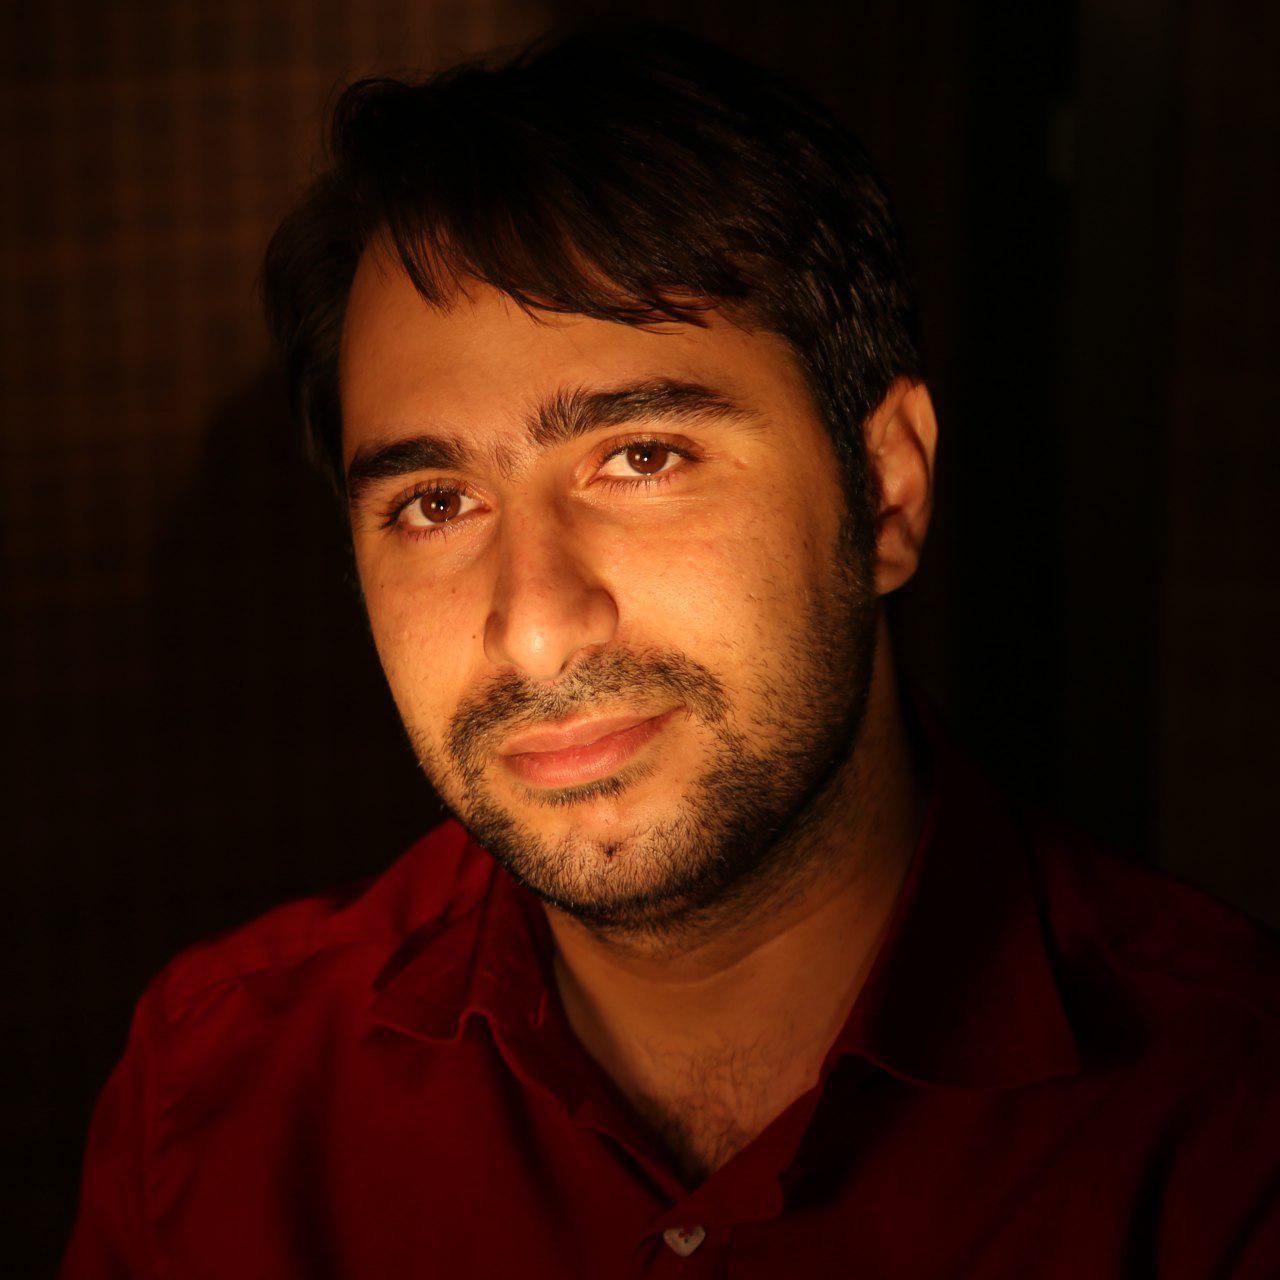 تصویری شخصی از محمدرضا امام‌قلی، کارگردان سینما و تلویزیون